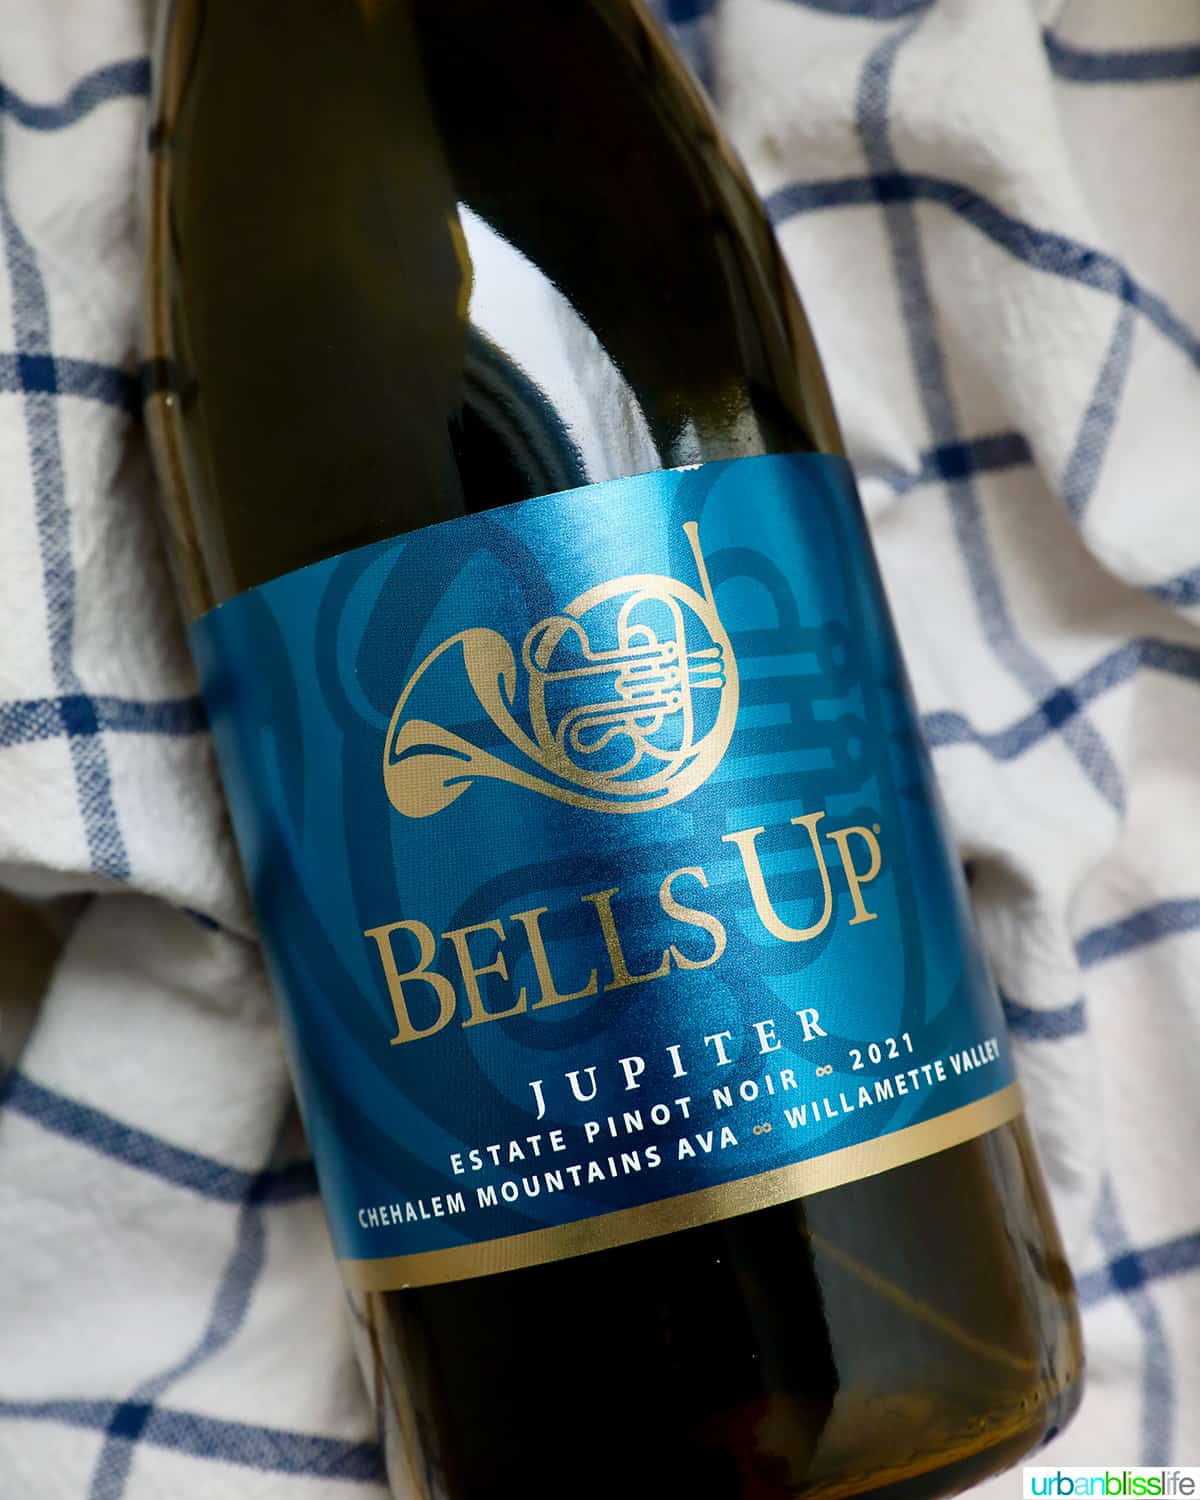 bottle of Bells Up Winery Jupiter Pinot noir on a checkered napkin.